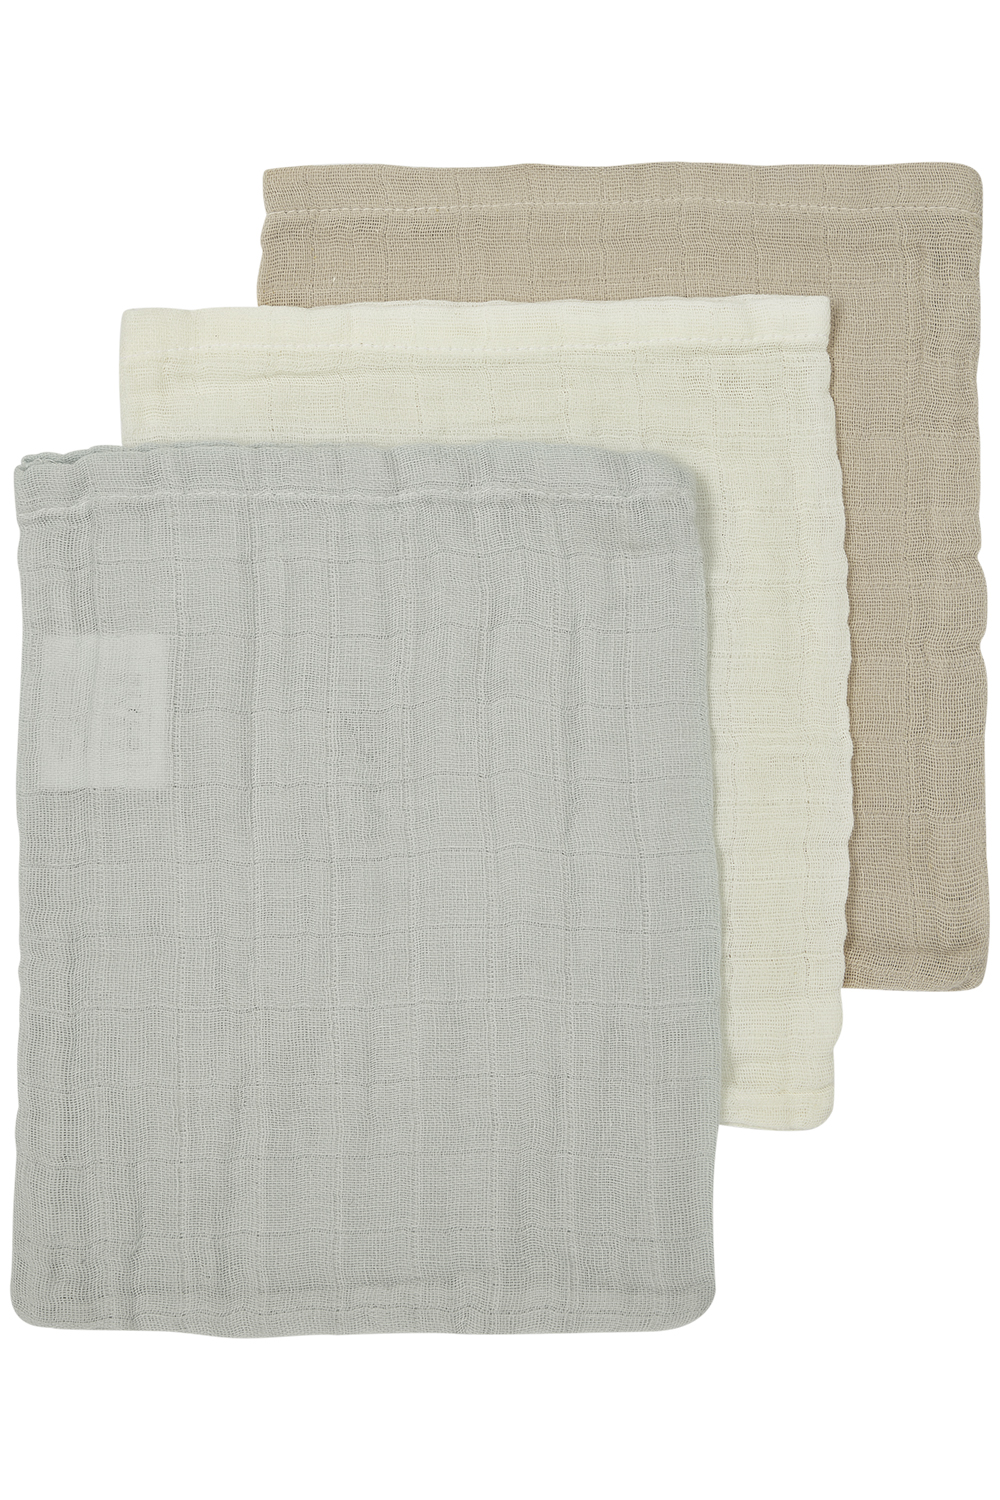 Washcloth 3-pack pre-washed muslin Uni - offwhite/light grey/sand - 20x17cm